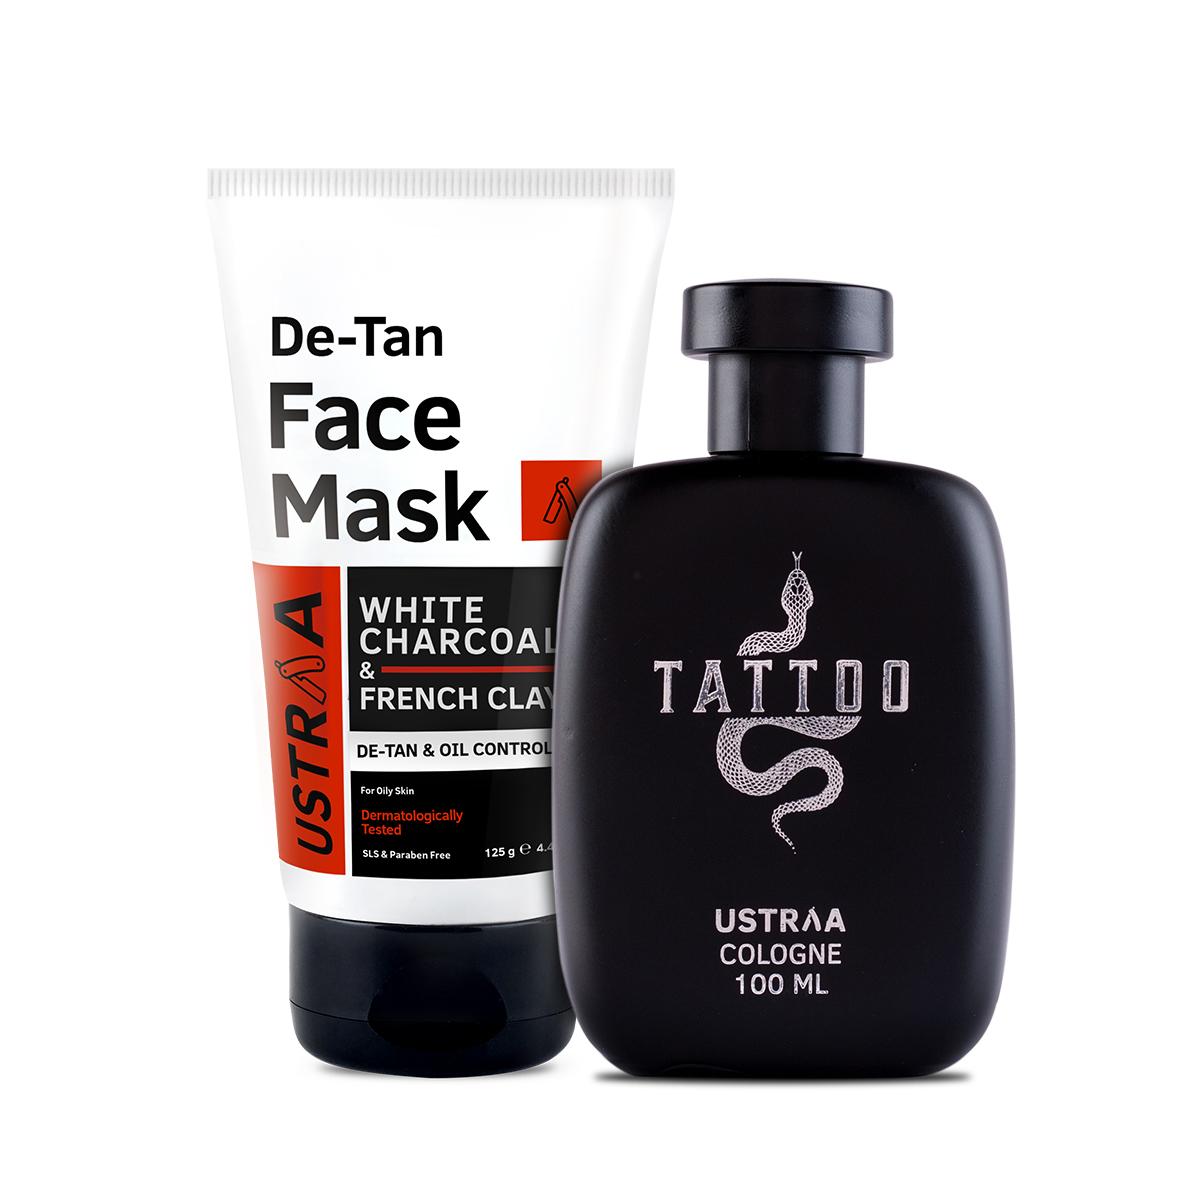 Face Mask - Oily Skin & Tattoo Cologne - 100 ml - Perfume for Men